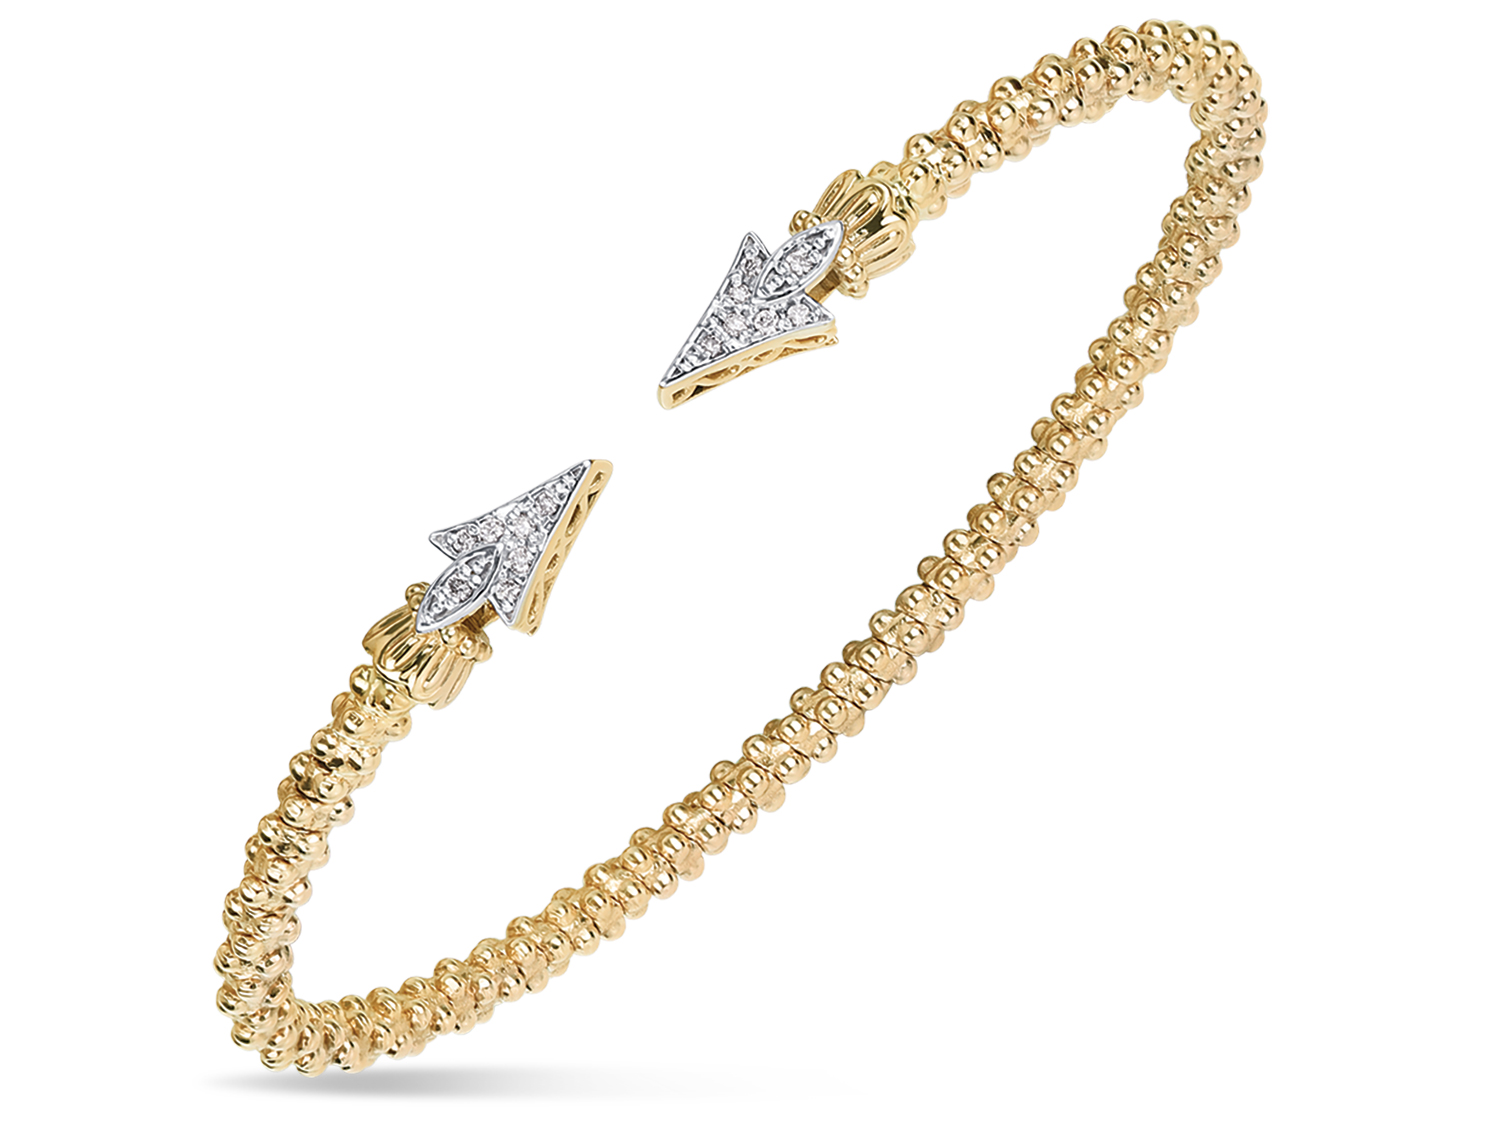 INSTORE Design Awards 2023 – Gold Jewelry Under $5,000